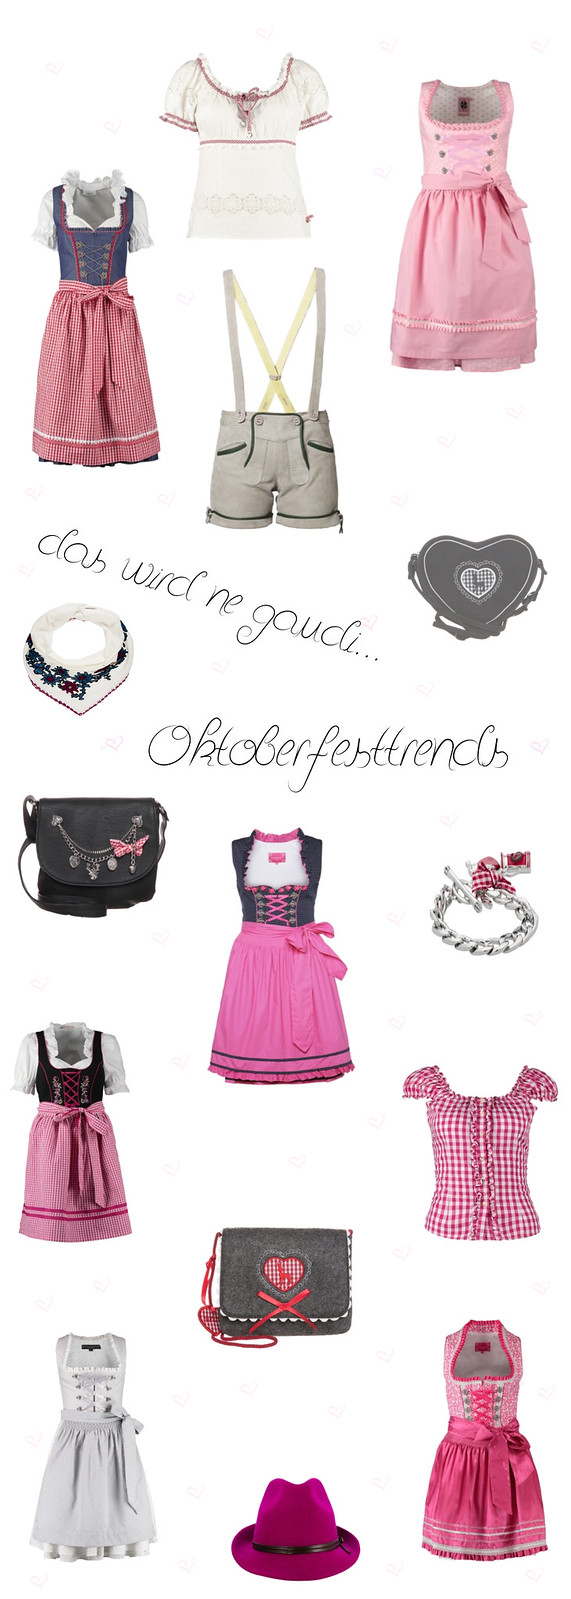 zalando-oktoberfest-dirndl-lederhose-wiesn-trends-pink-fashionblog-outfit